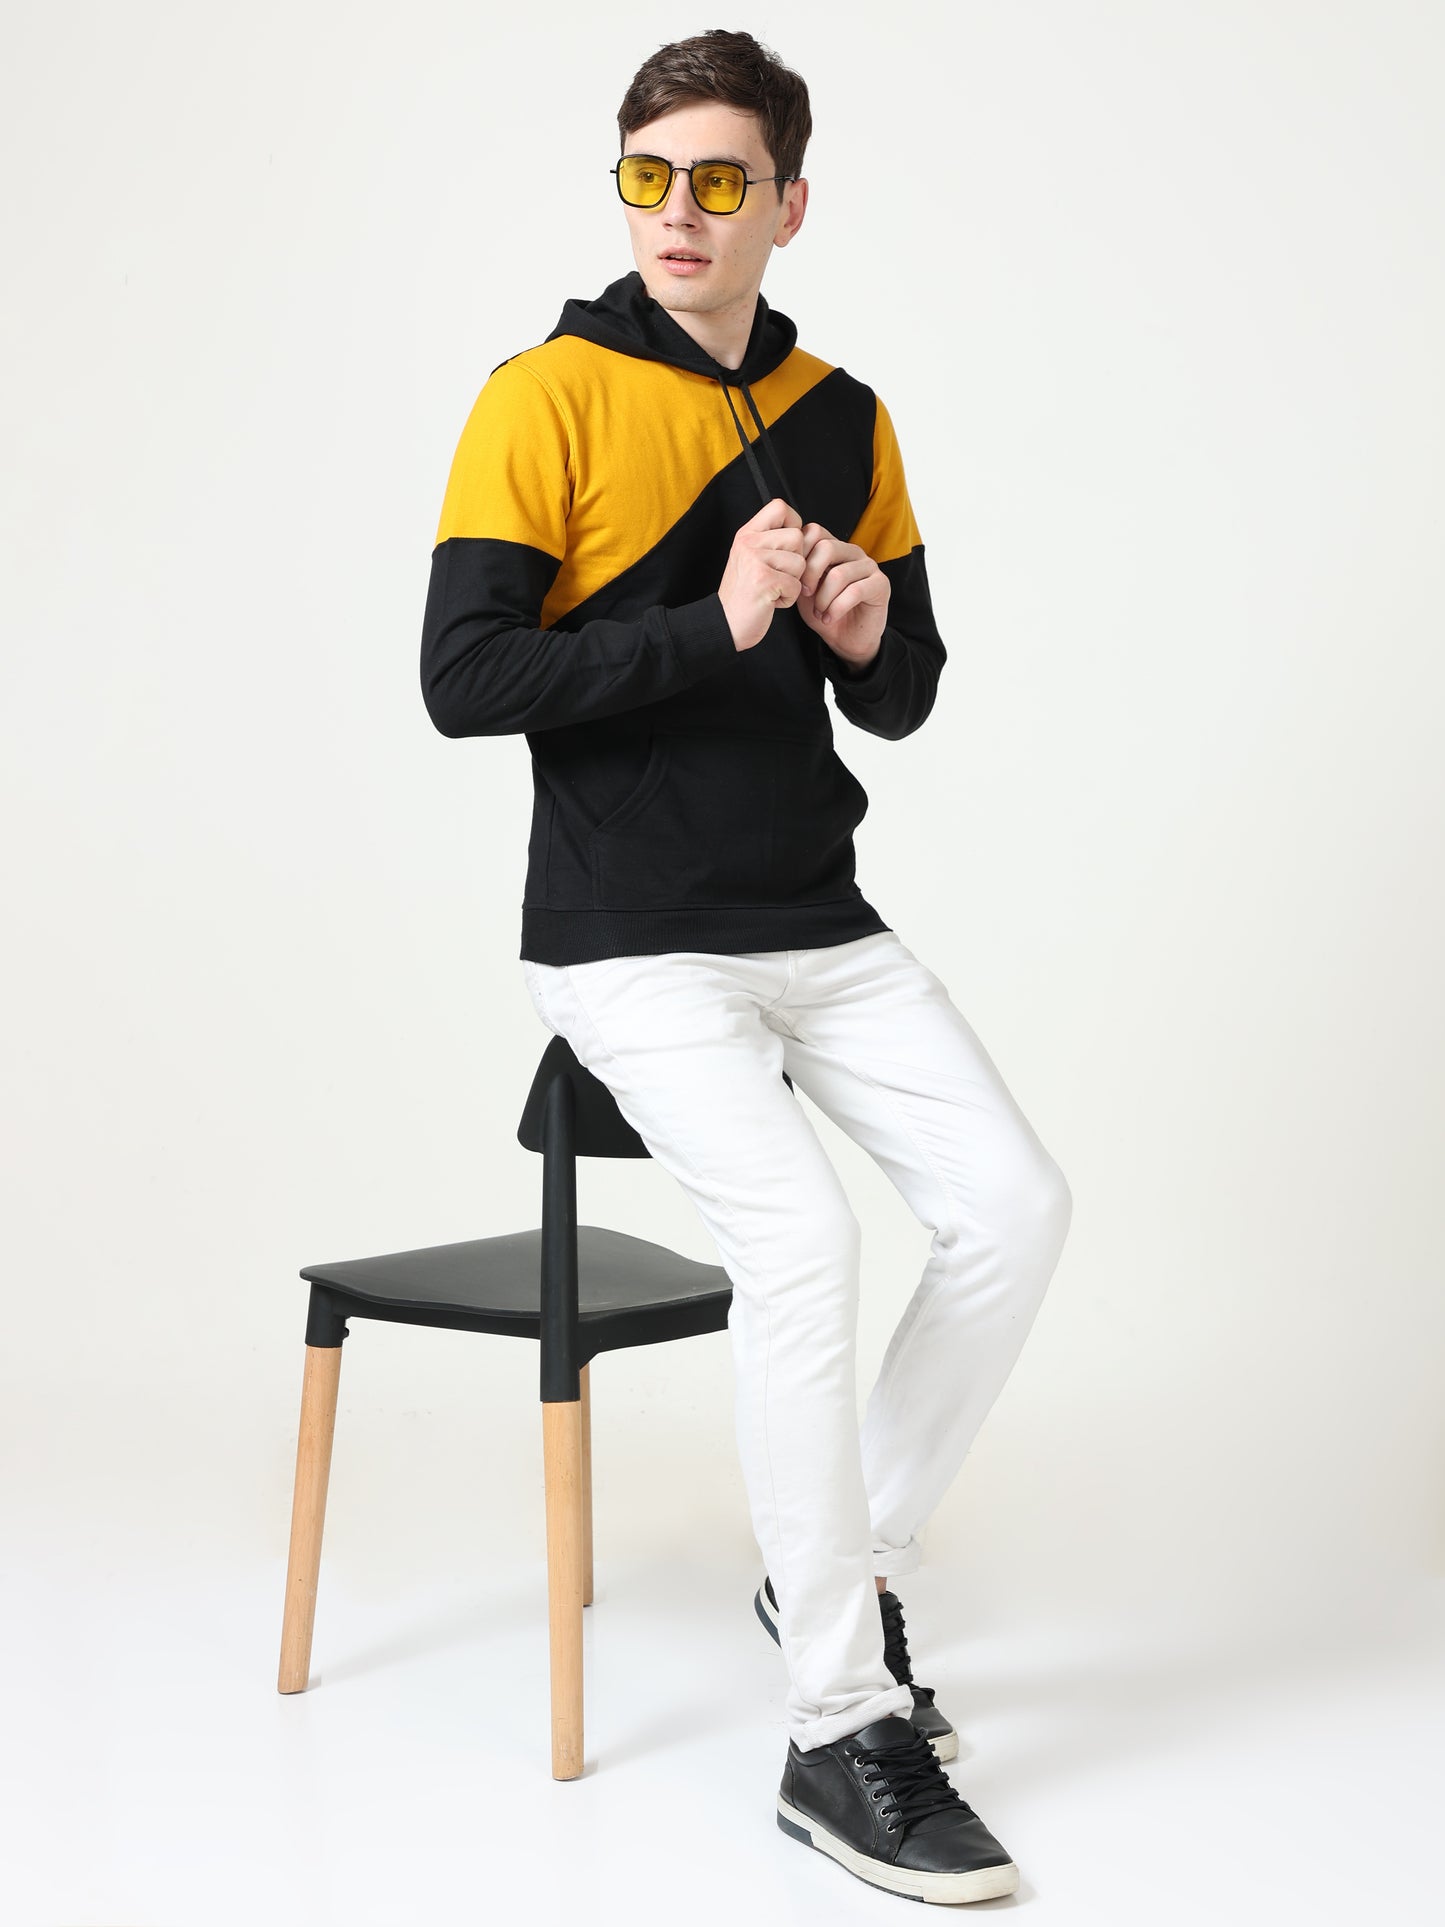 Men's Cotton Color Block Sweatshirt Mustardblack Color Hoodies